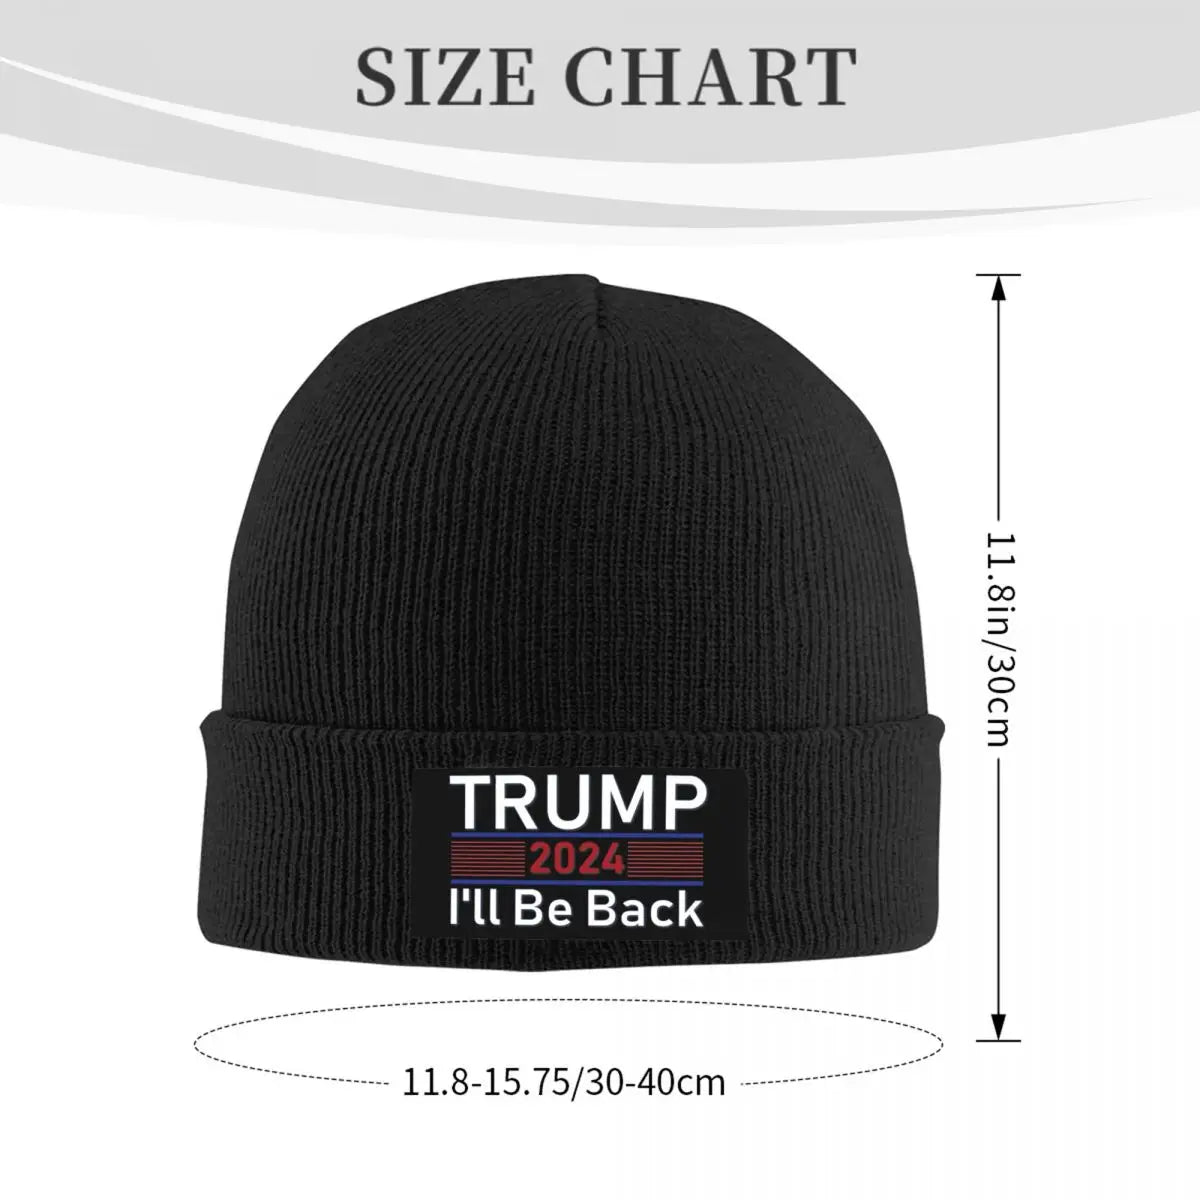 Trump 2024 I'll Be Back Bonnet Hat Knit Hat Men Women Fashion Unisex Adult Winter Warm Skullies Beanies Caps